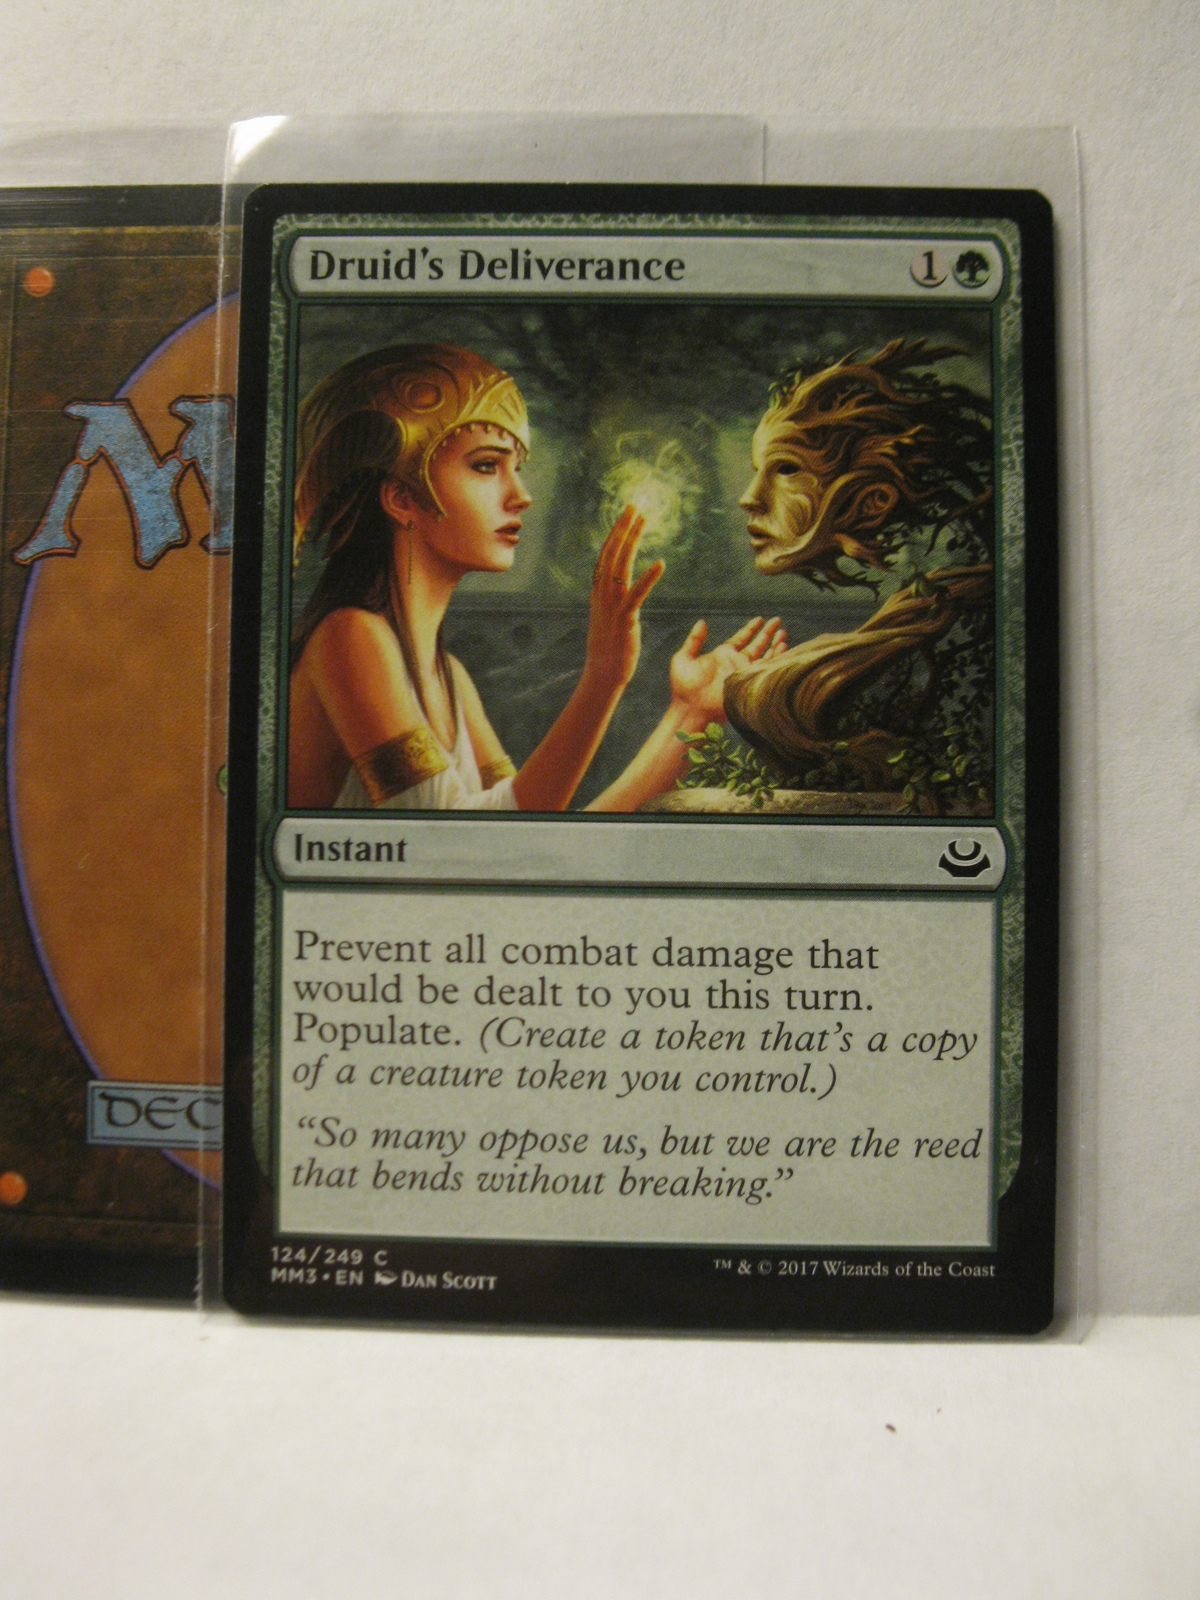 (TC-1127) 2017 Magic / Gathering Trading Card #124/249 C: Druid's Deliverance - $1.00